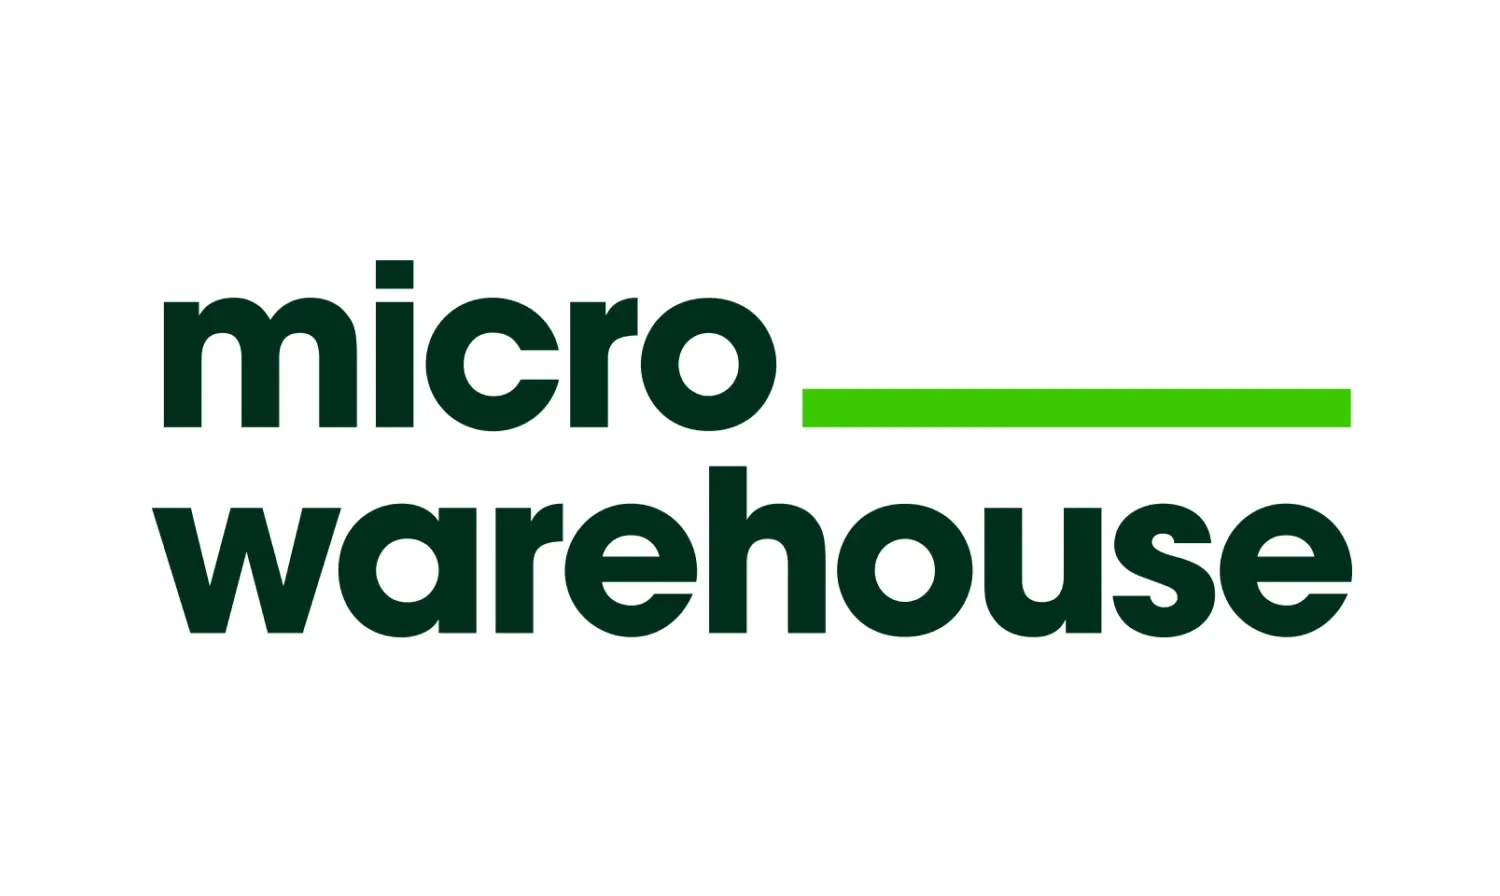 microwarehouse logo